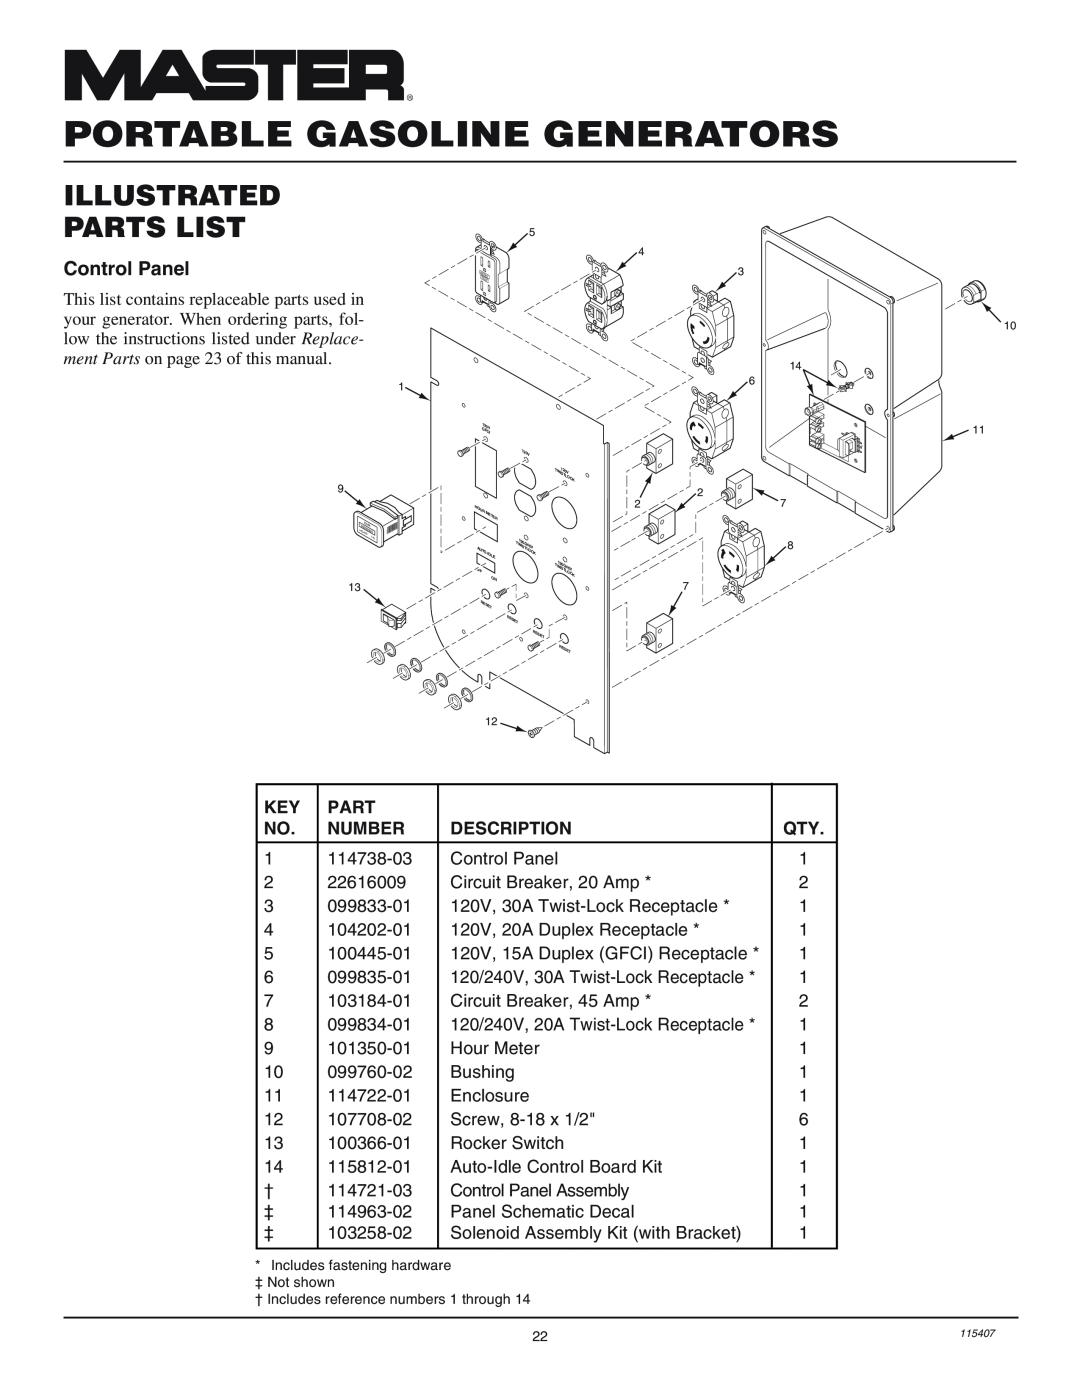 Master Lock MGH8500IE Control Panel, Portable Gasoline Generators, Illustrated Parts List, Number, Description 